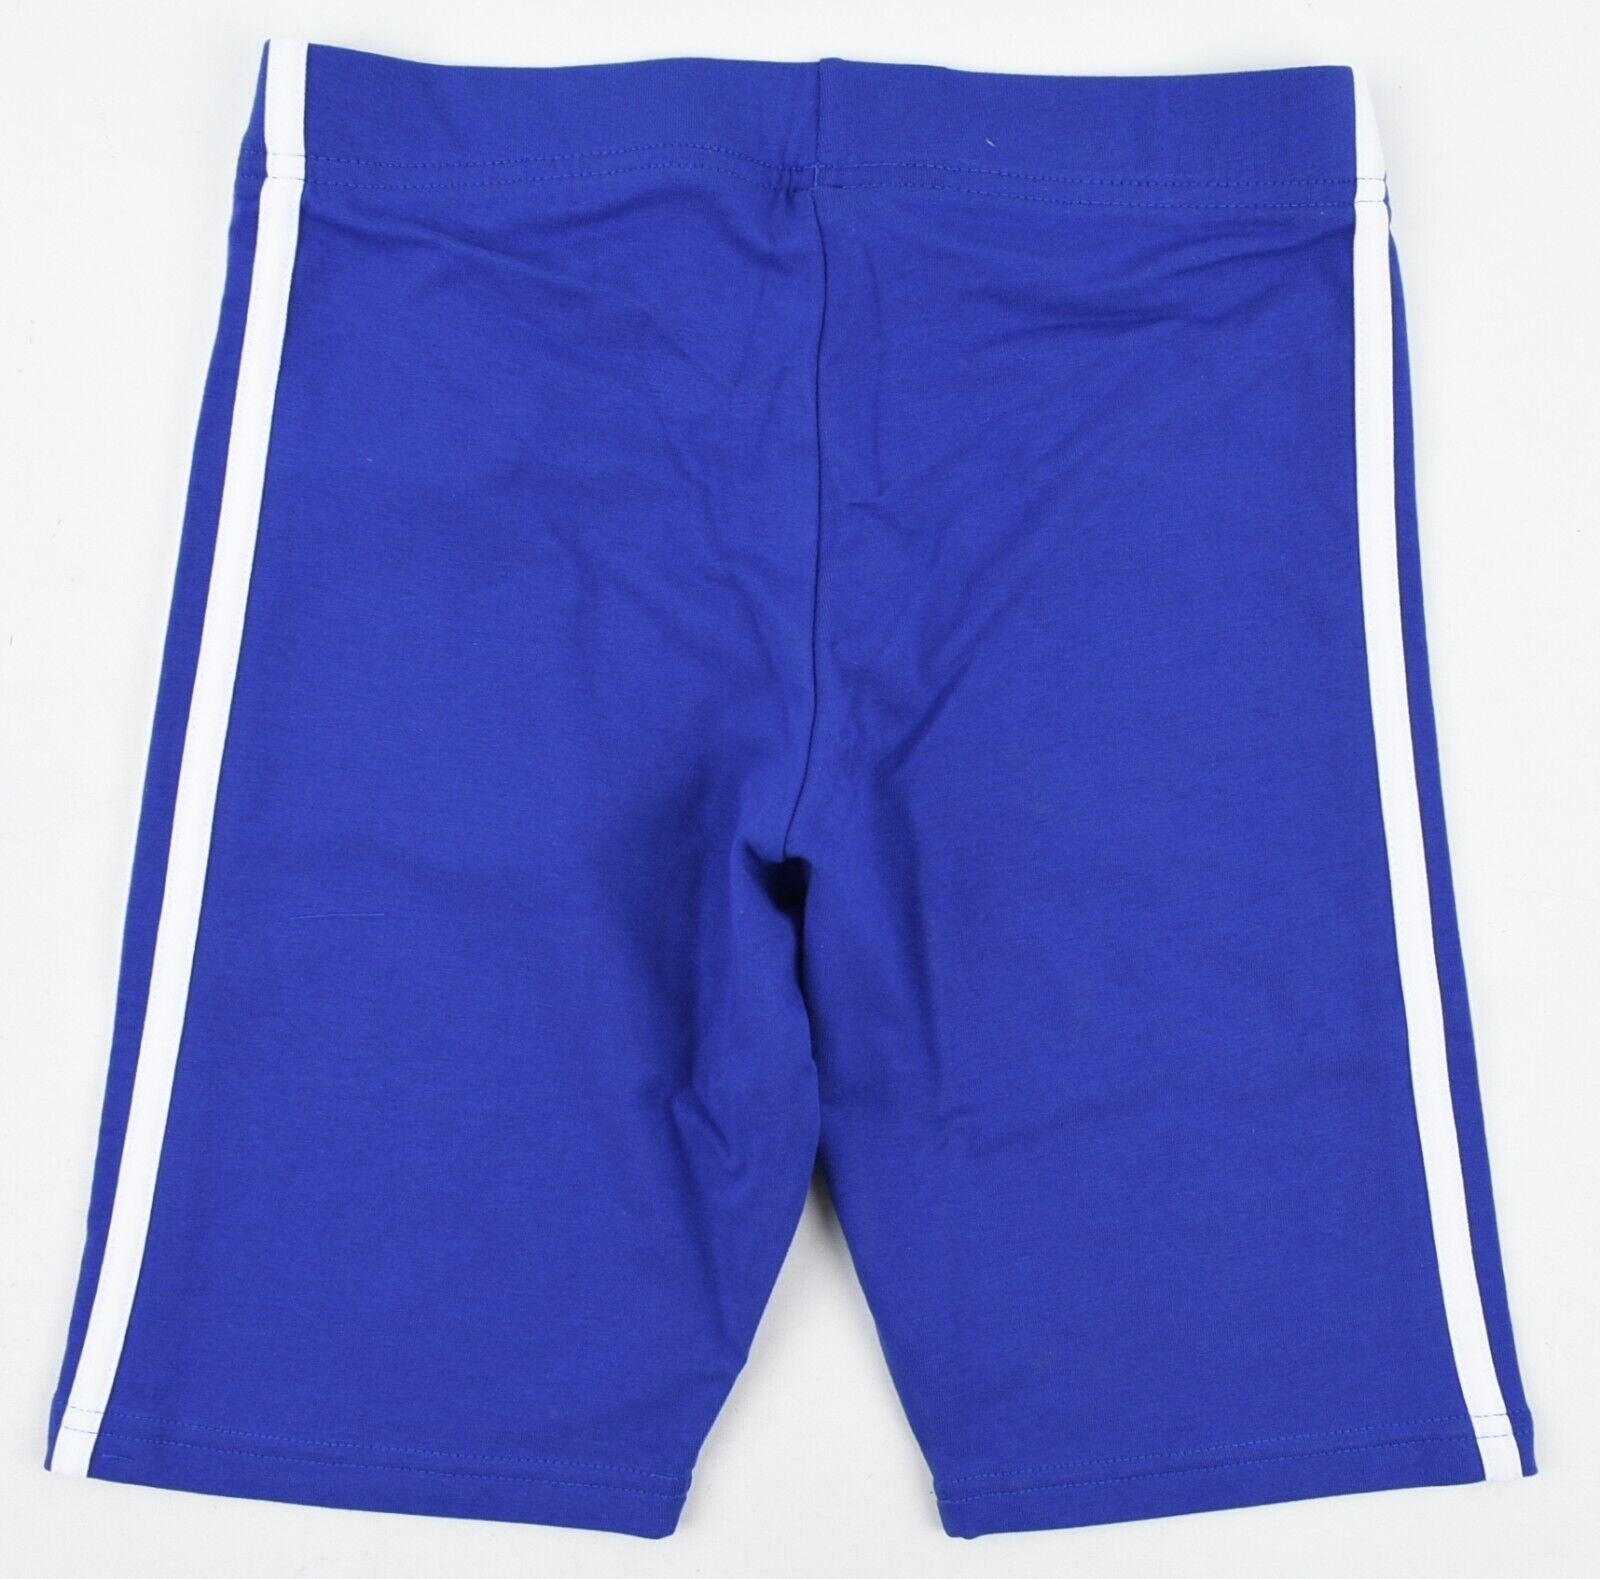 ADIDAS Womens 3 Stripes Essential Cycling Shorts, Leggings, Bold Blue, size S